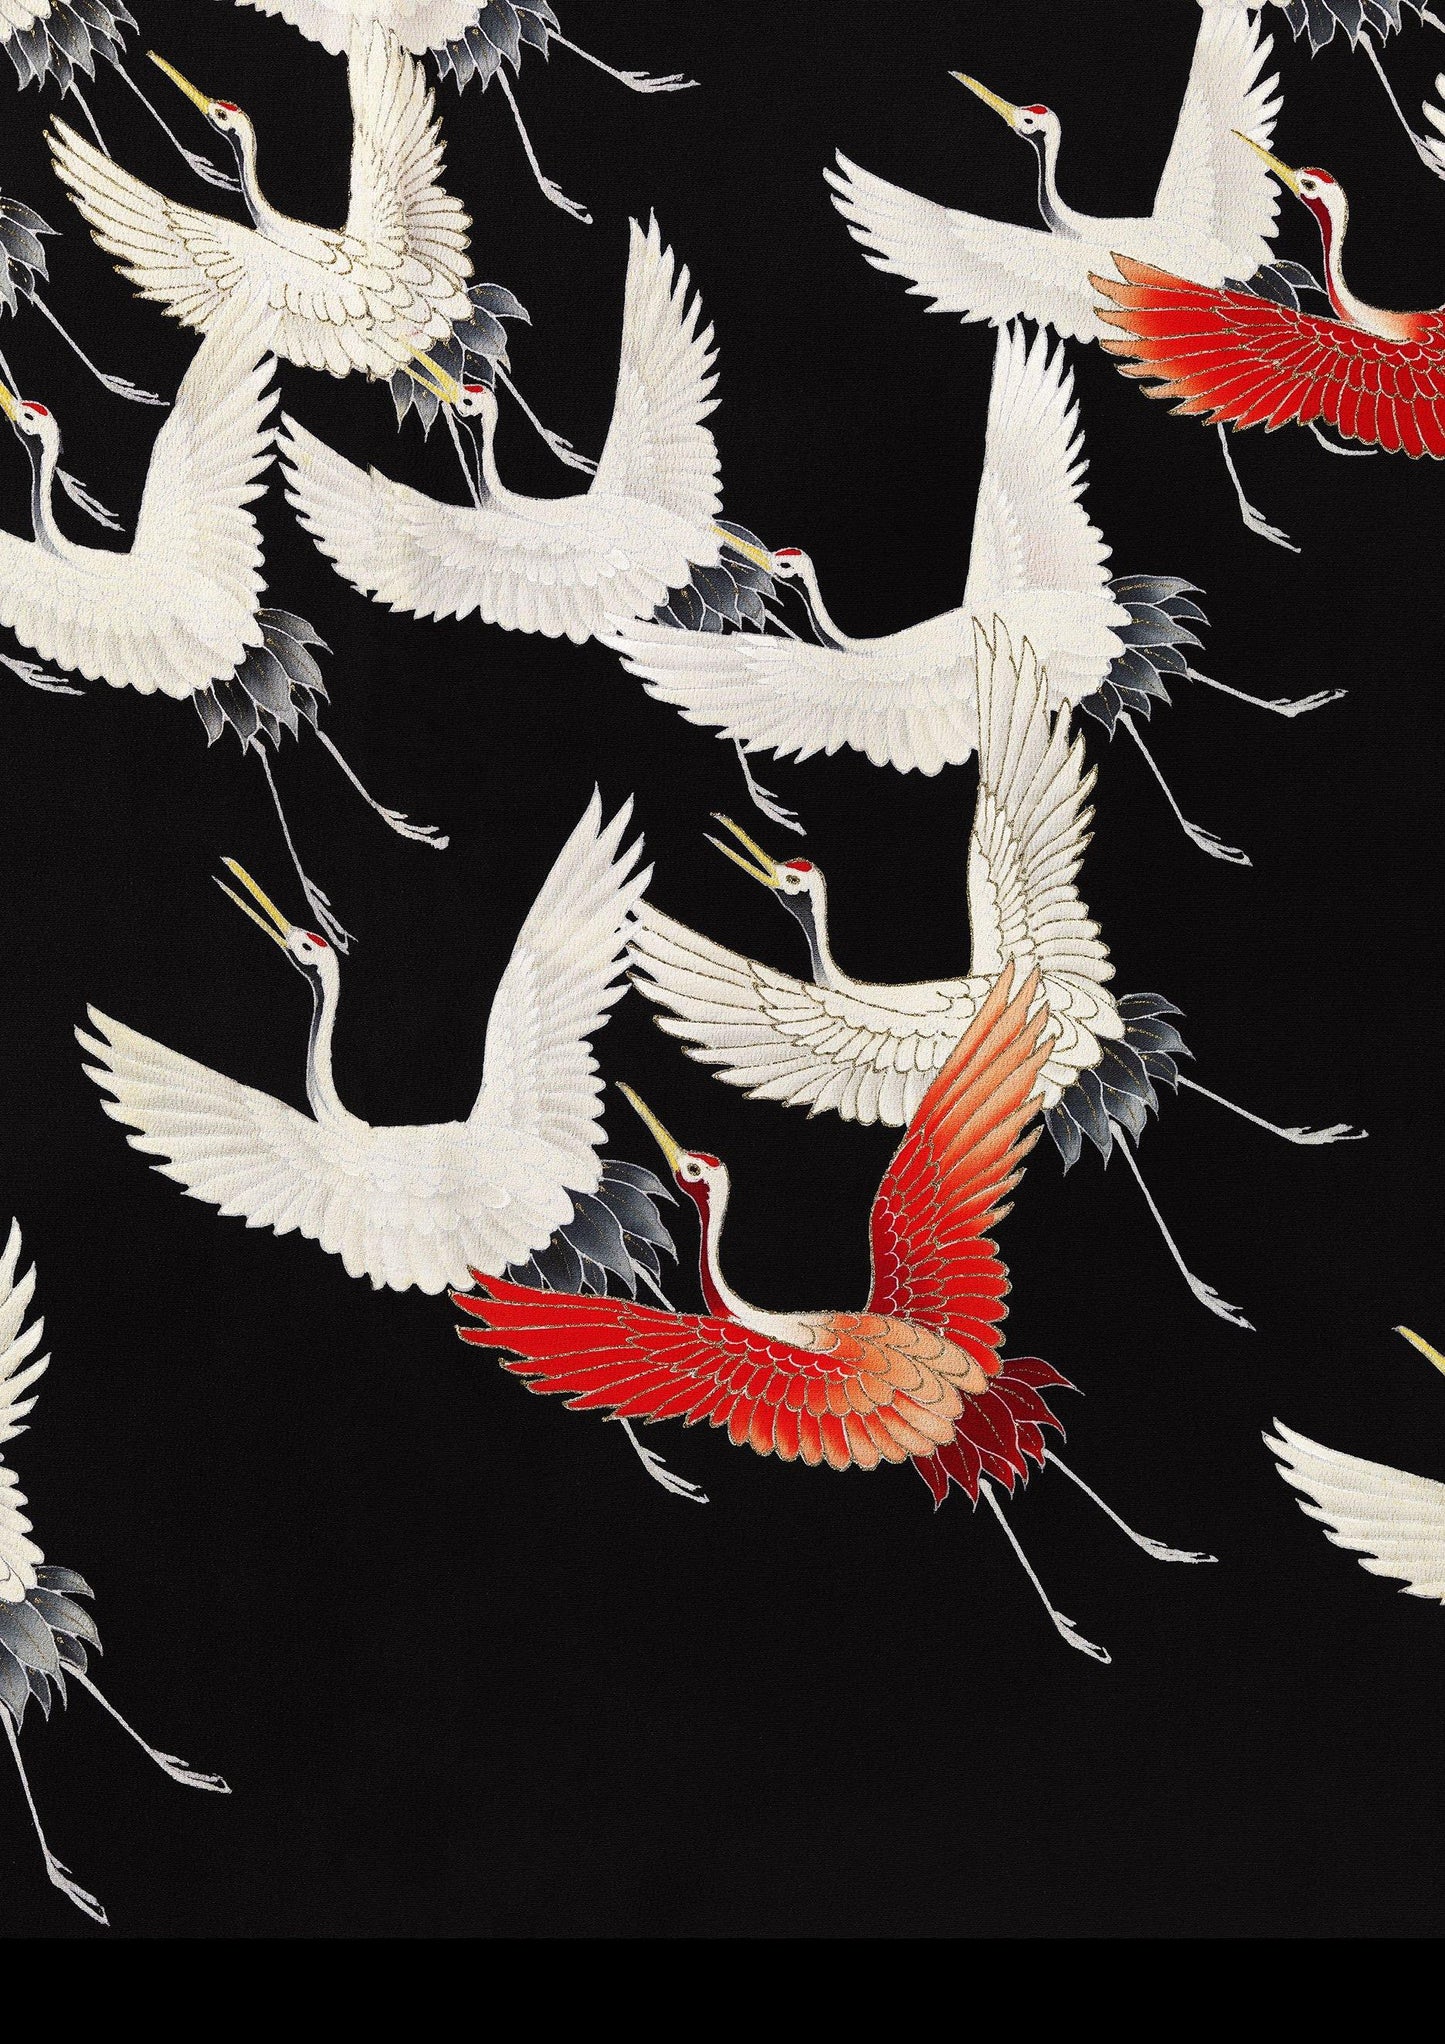 CRANES ART PRINT: Vintage Red and White Birds Illustration - Pimlico Prints